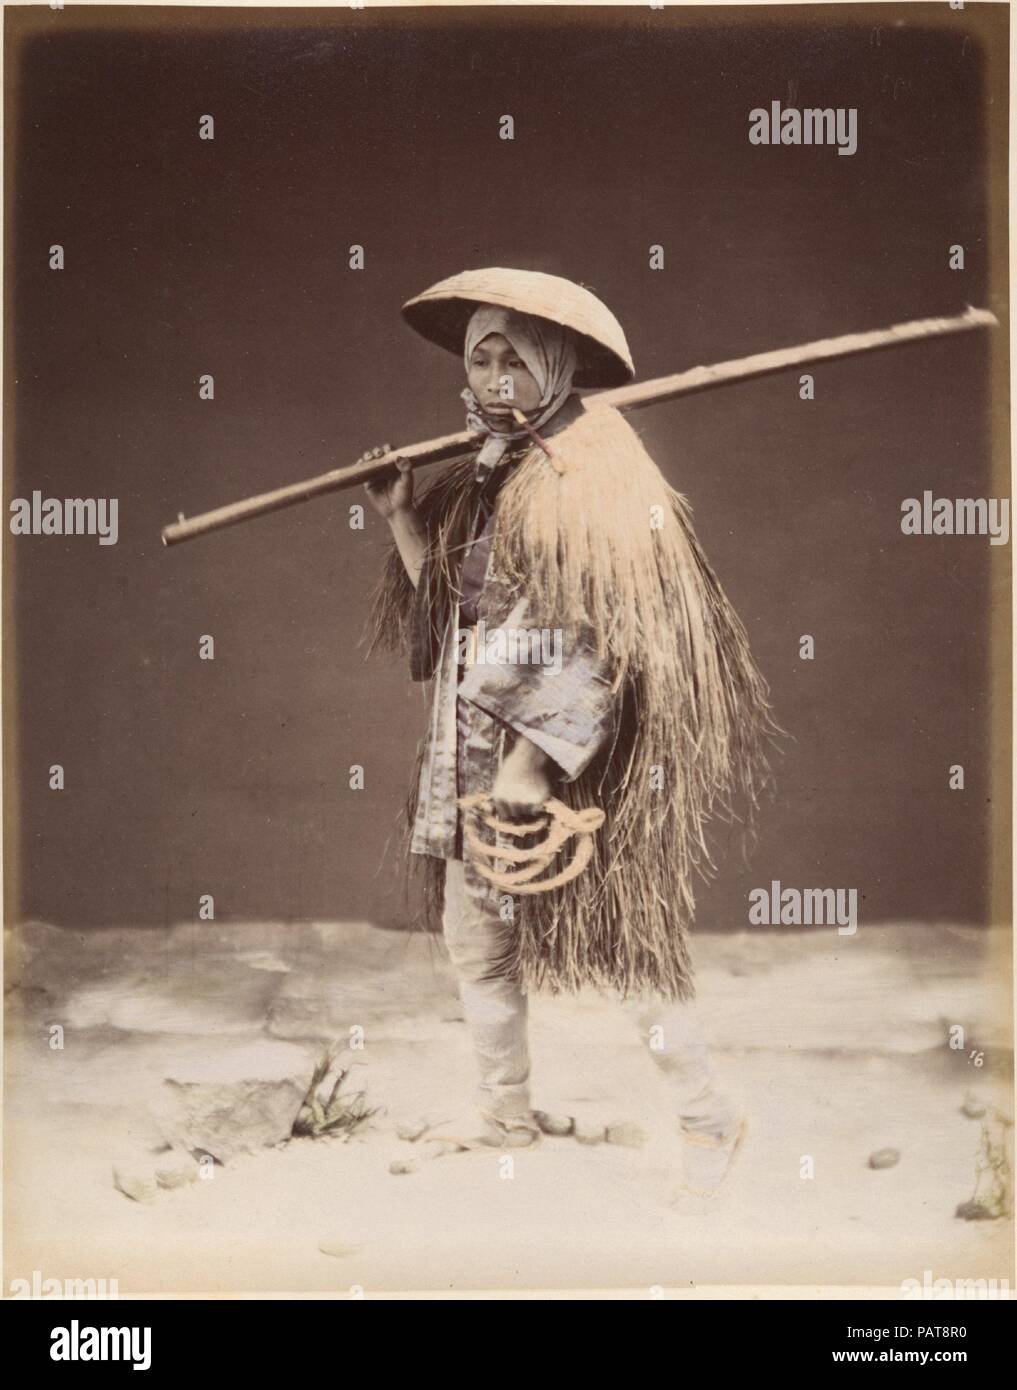 Farm laborer with rain coat (mino). Artist: Suzuki Shin'ichi (Japanese, 1835-1919). Dimensions: 25.2 x 19.7 cm (9 15/16 x 7 3/4 in.). Date: 1870s. Museum: Metropolitan Museum of Art, New York, USA. Stock Photo